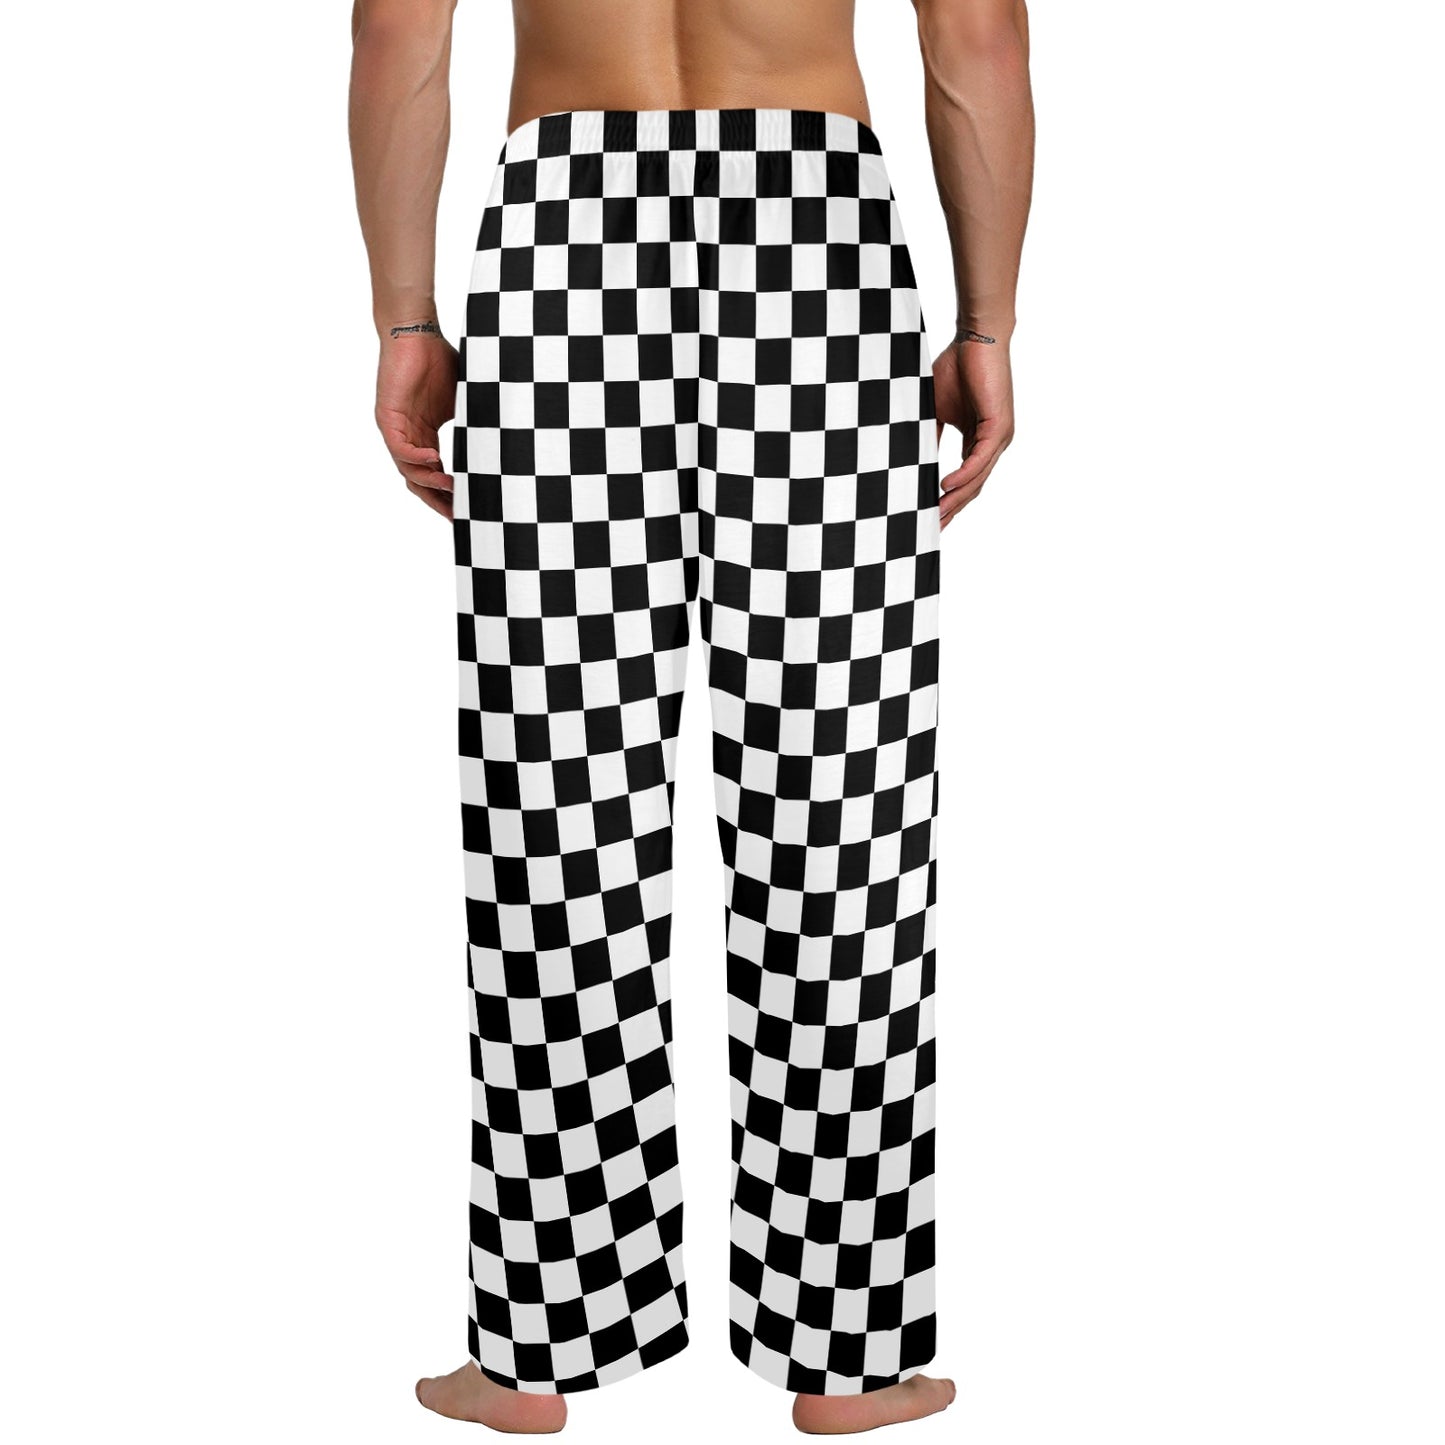 Checkered Men Pajamas Pants, Black White Check Checkerboard Satin PJ Sleep Trousers Couples Matching Trousers Bottoms